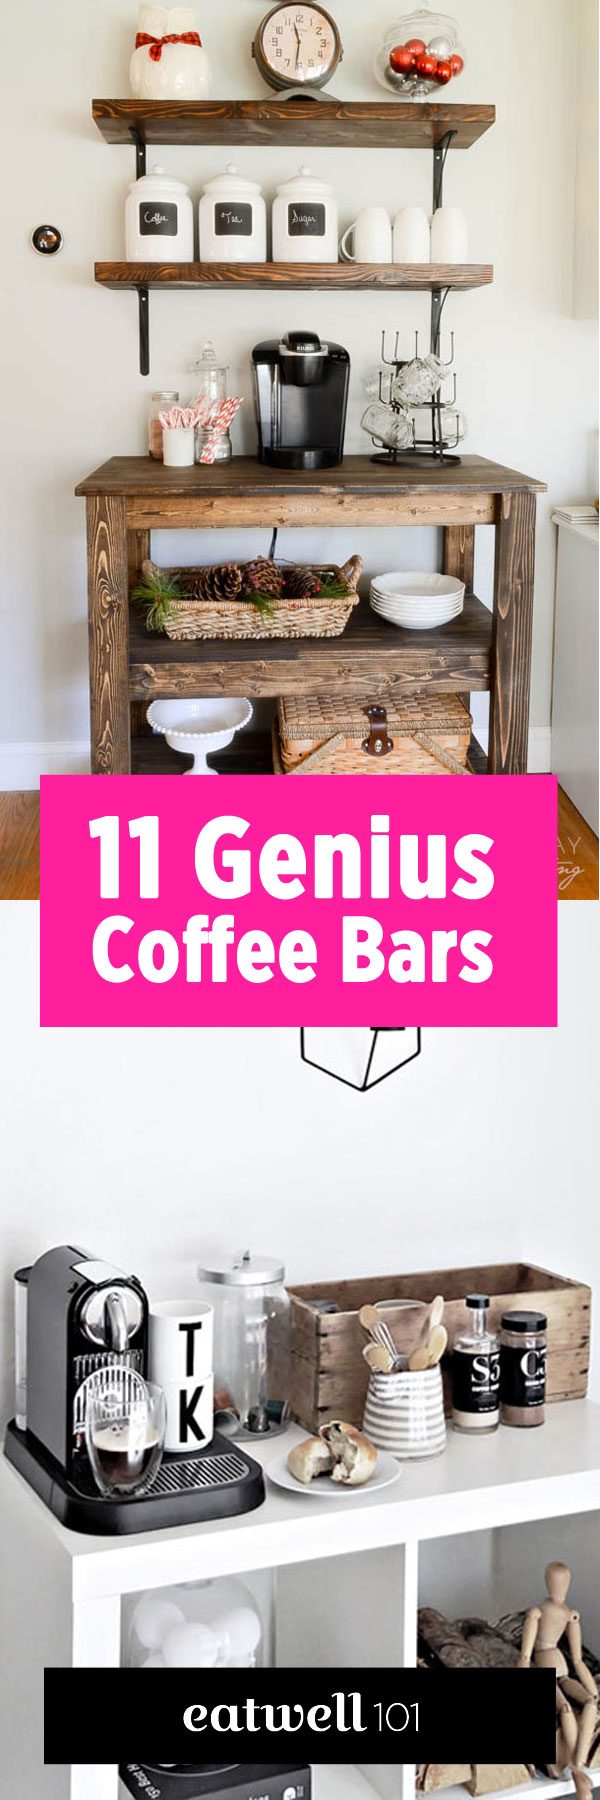 https://www.eatwell101.com/wp-content/uploads/2016/10/coffee-bar-design-ideas.jpg